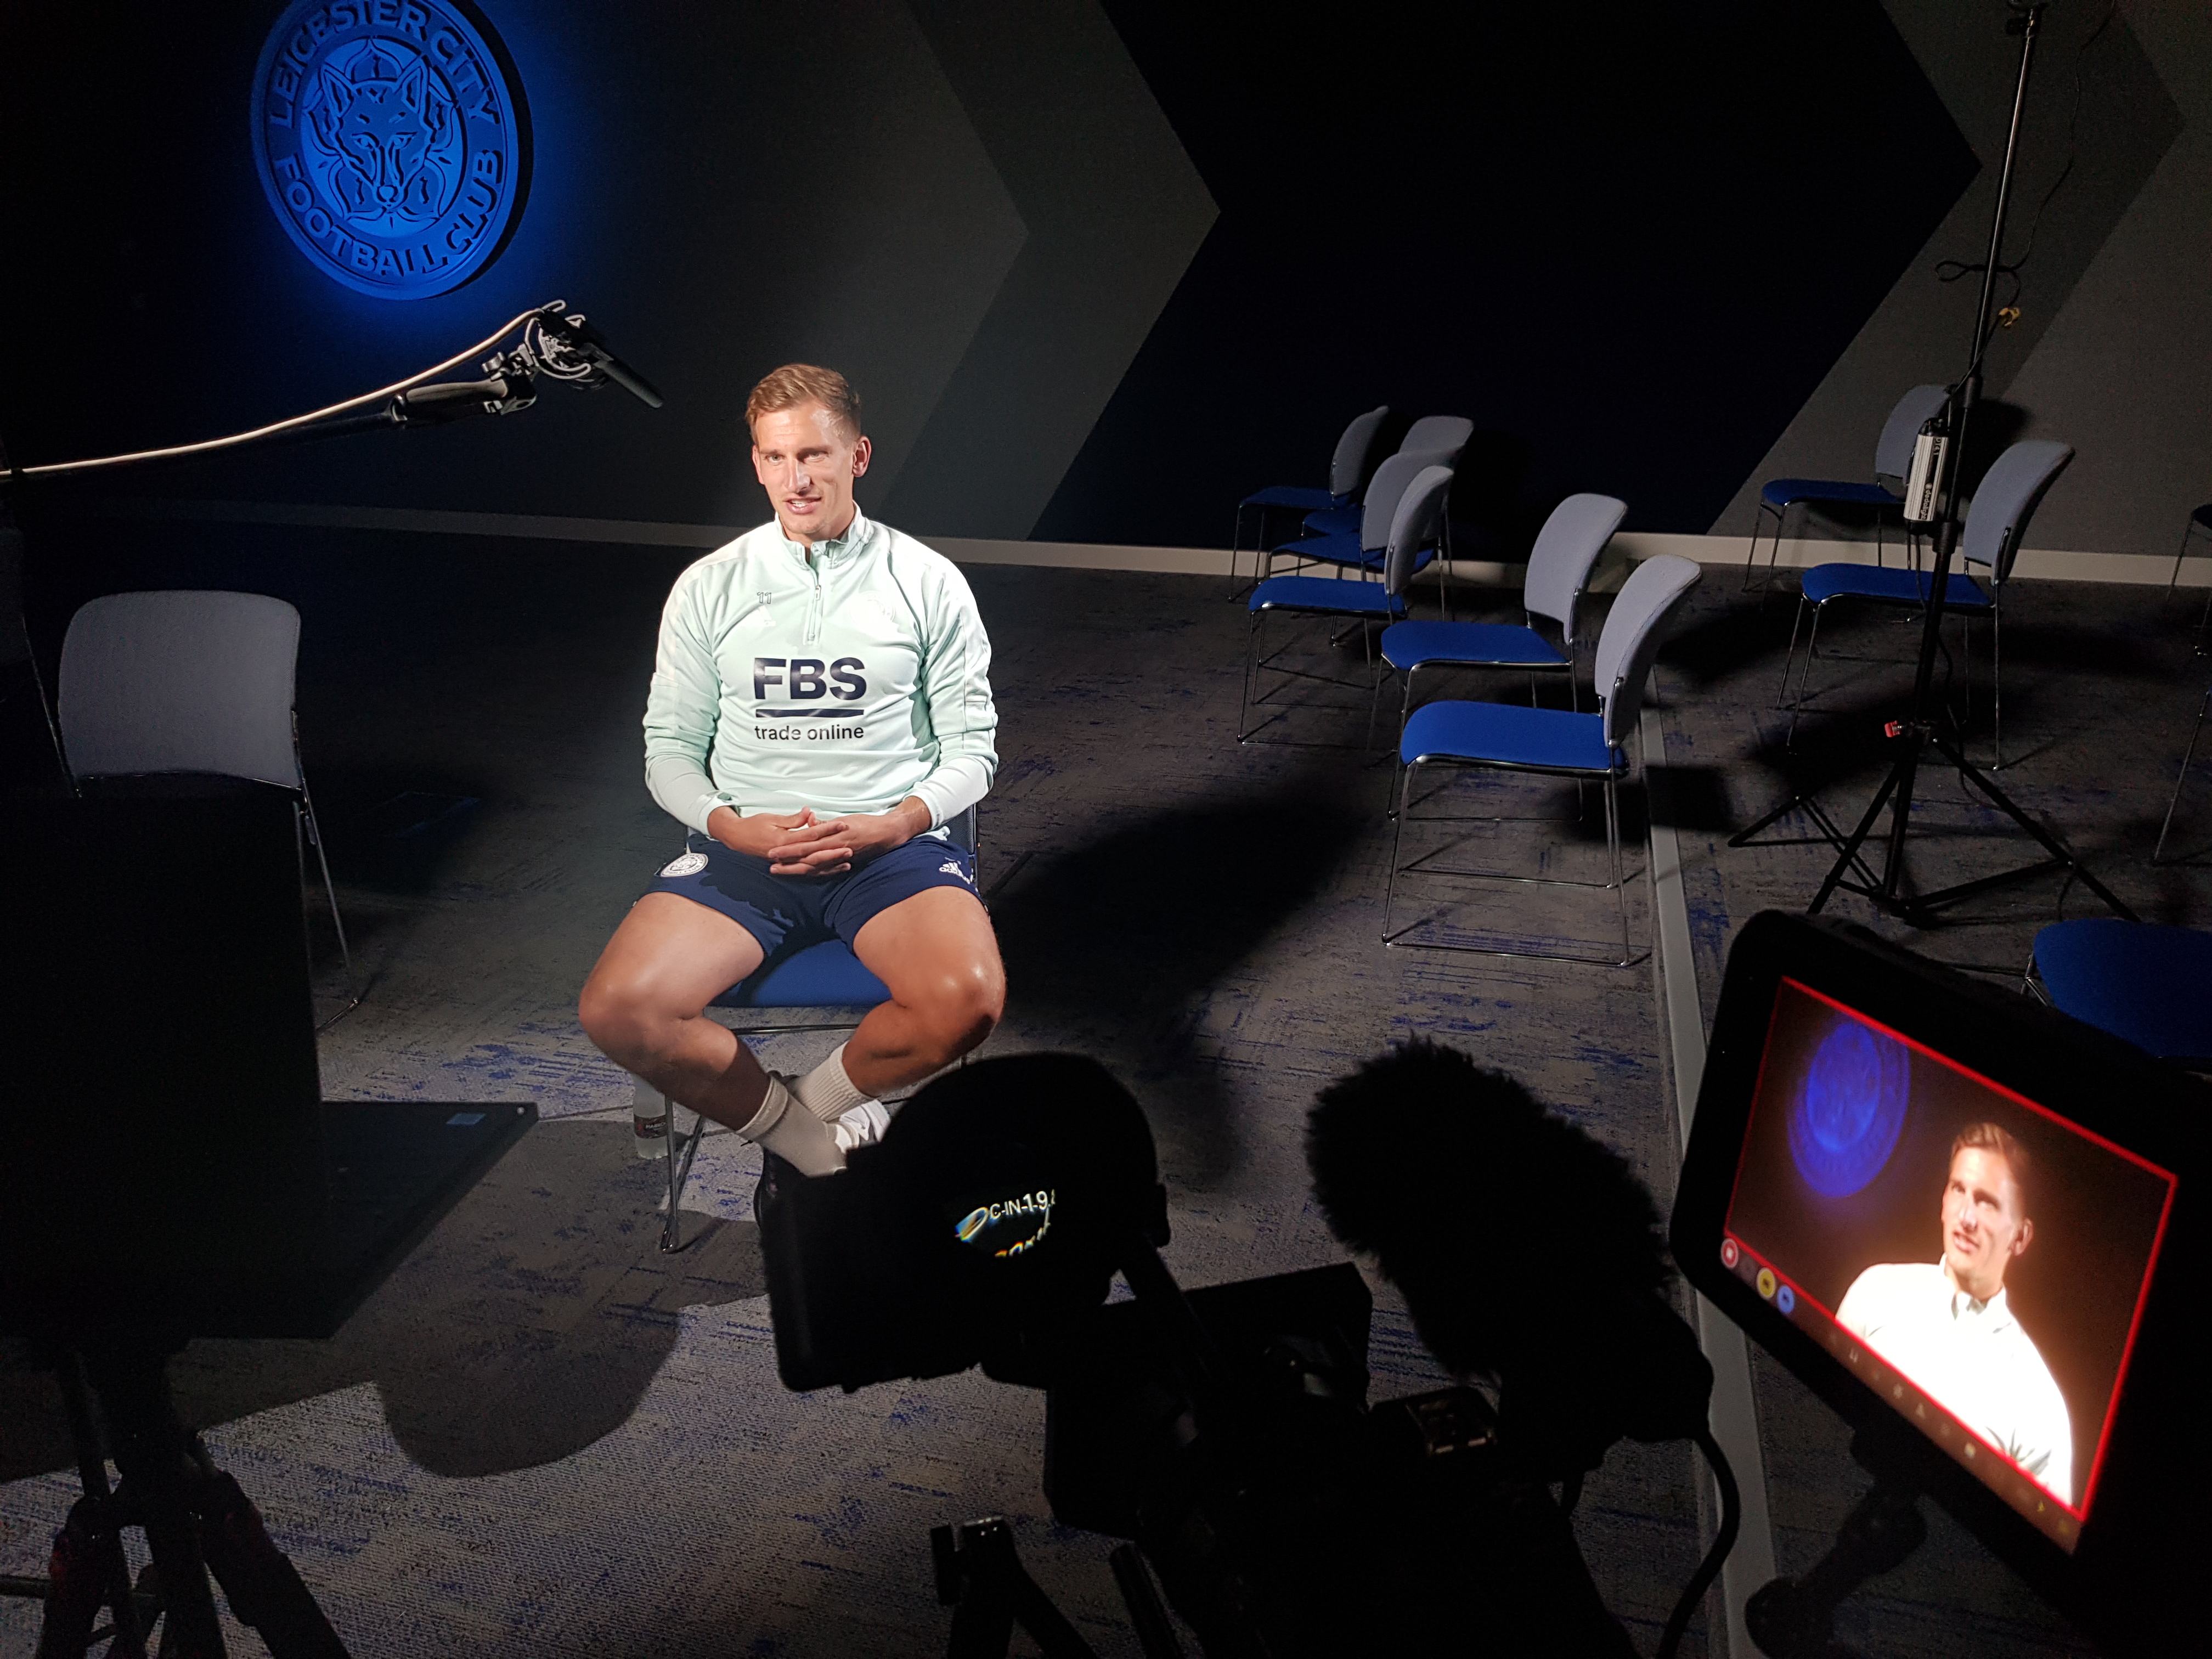 Marc Albrighton, Leicester City interview via Zoom